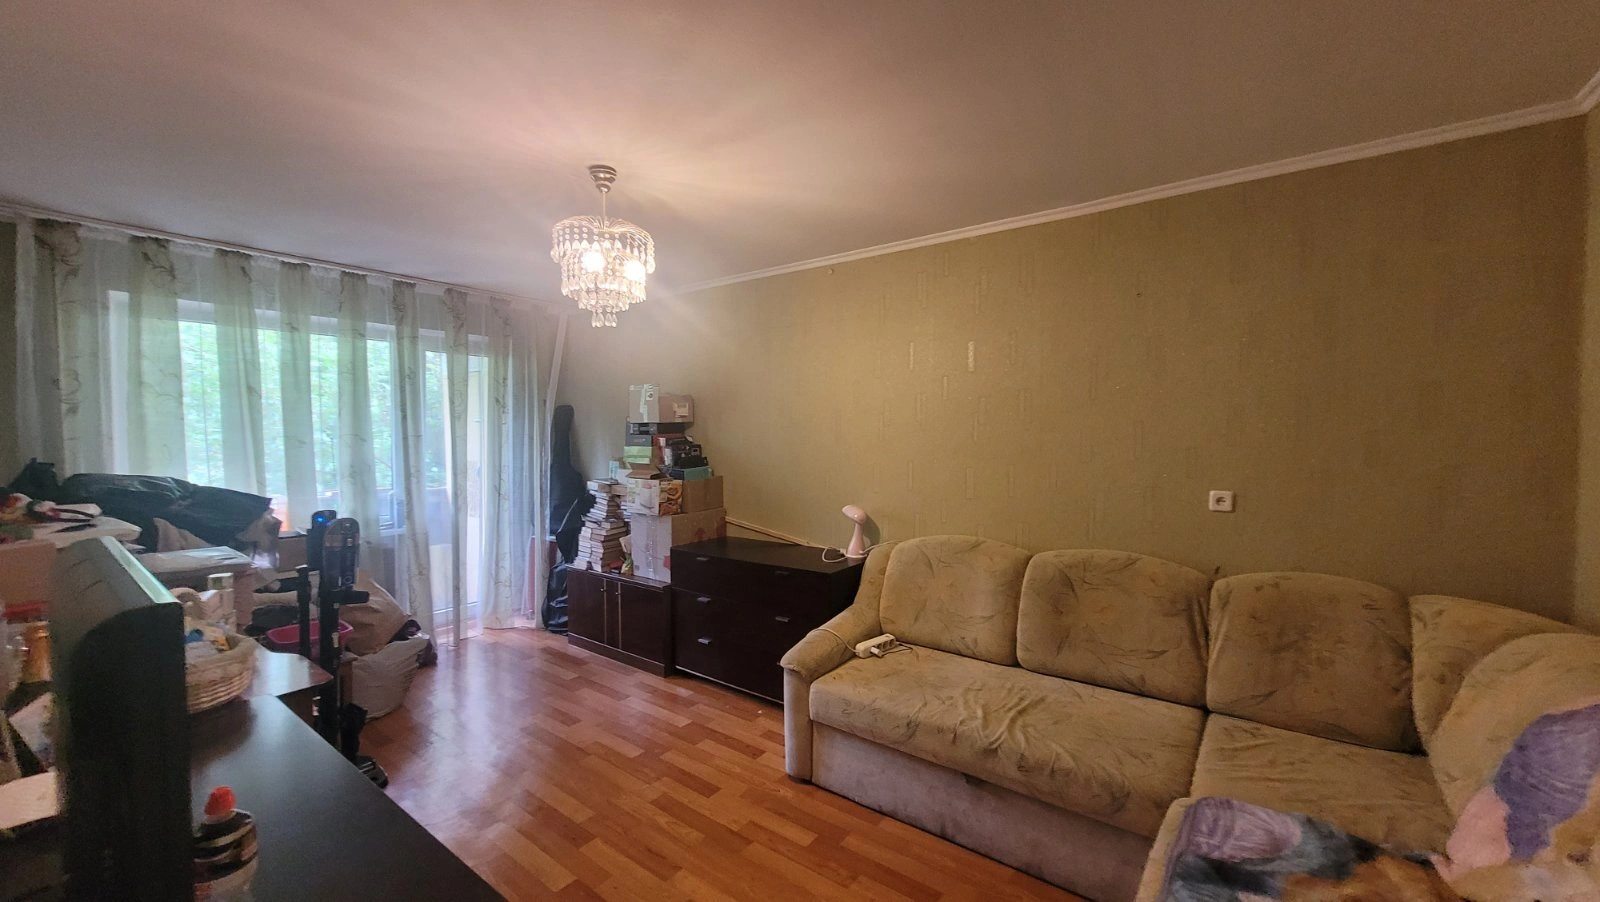 Продажа квартиры 3-комн., 64 кв. м., Академика Королева, Таирова, Одесса